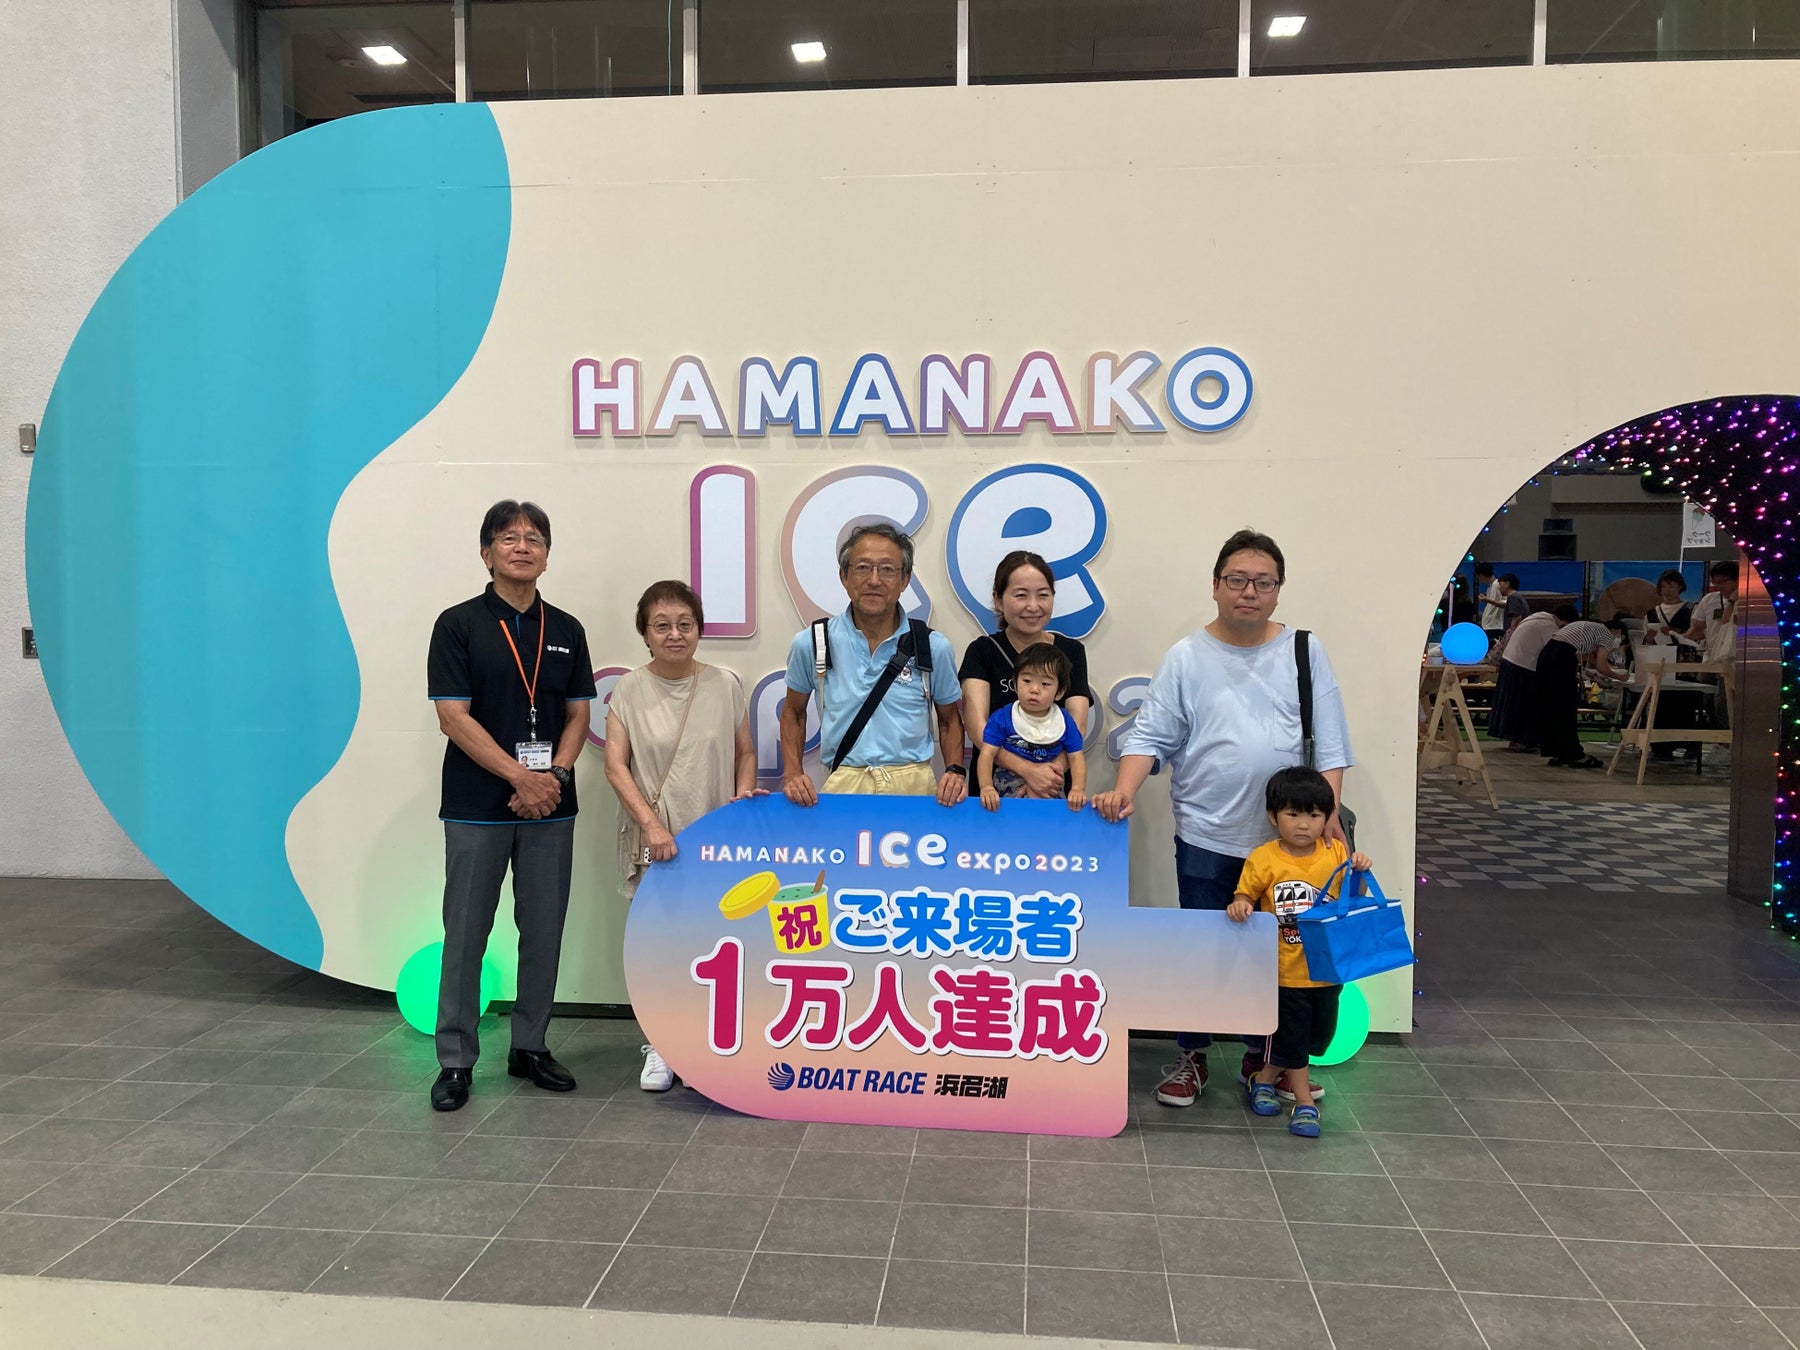 HAMANAKO ICE EXPO 2023「来場1万人達成」のサブ画像1